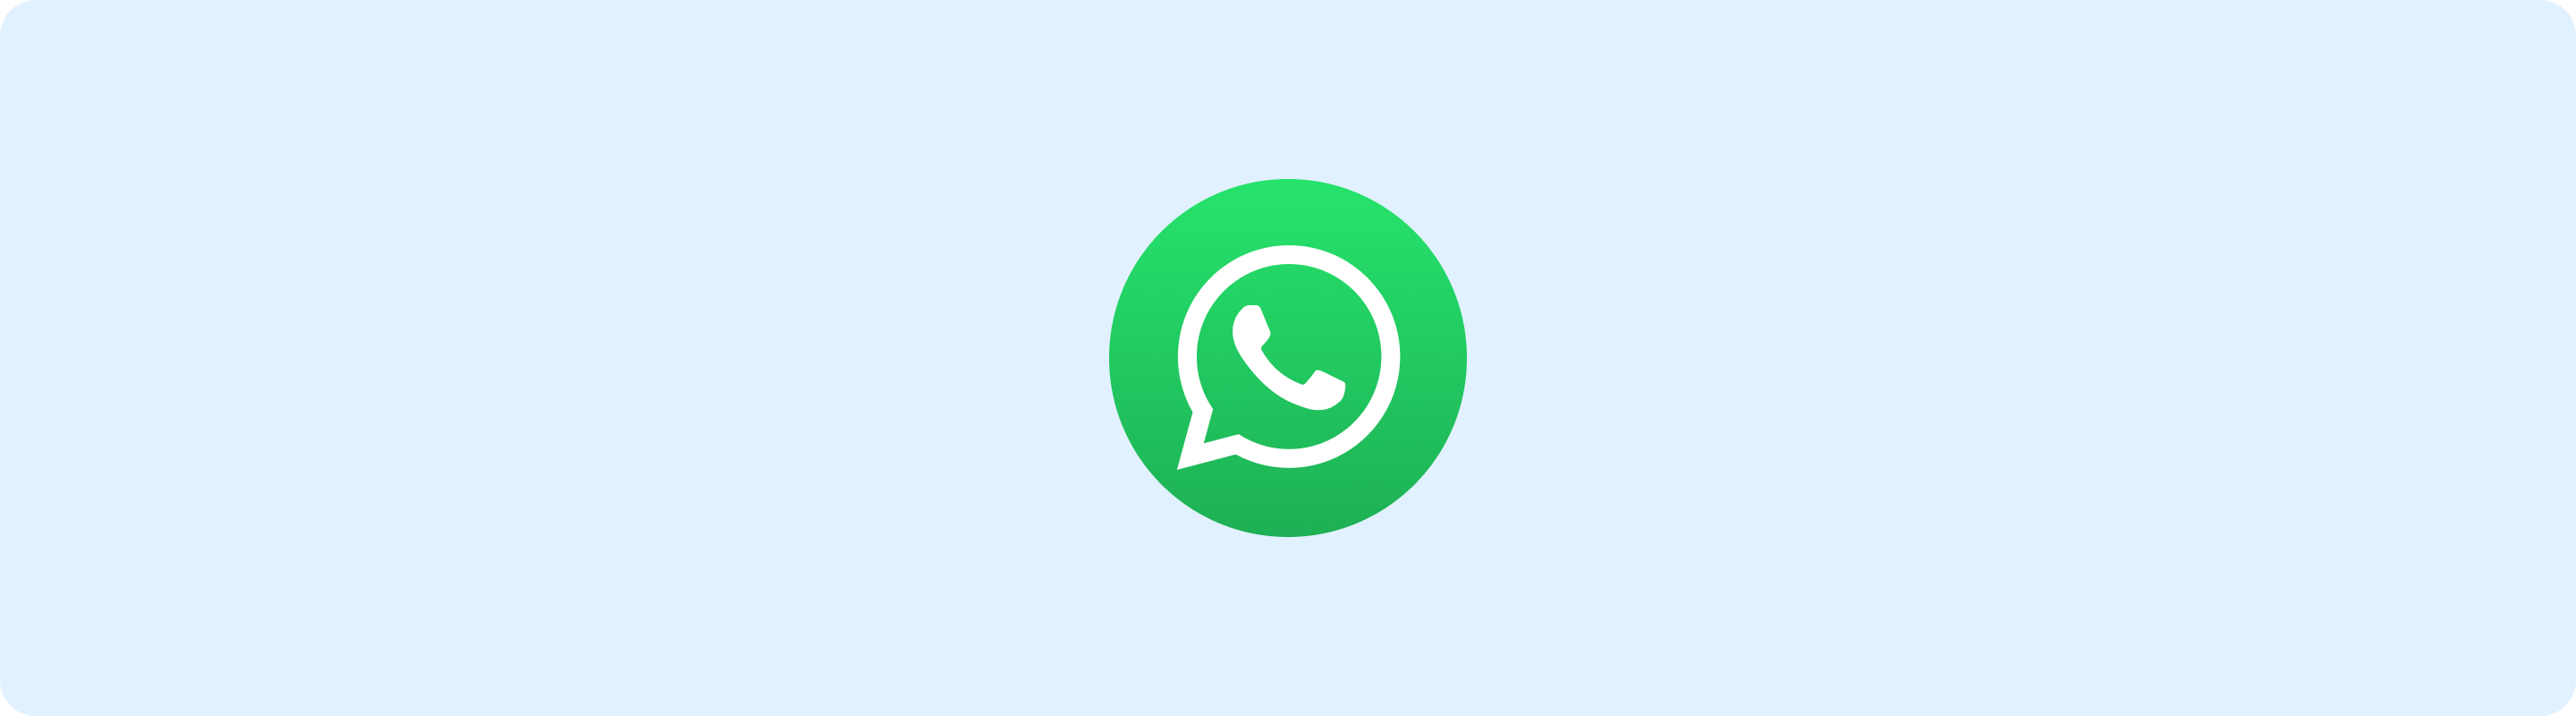 Instant Messaging für Unternehmen - WhatsApp.png